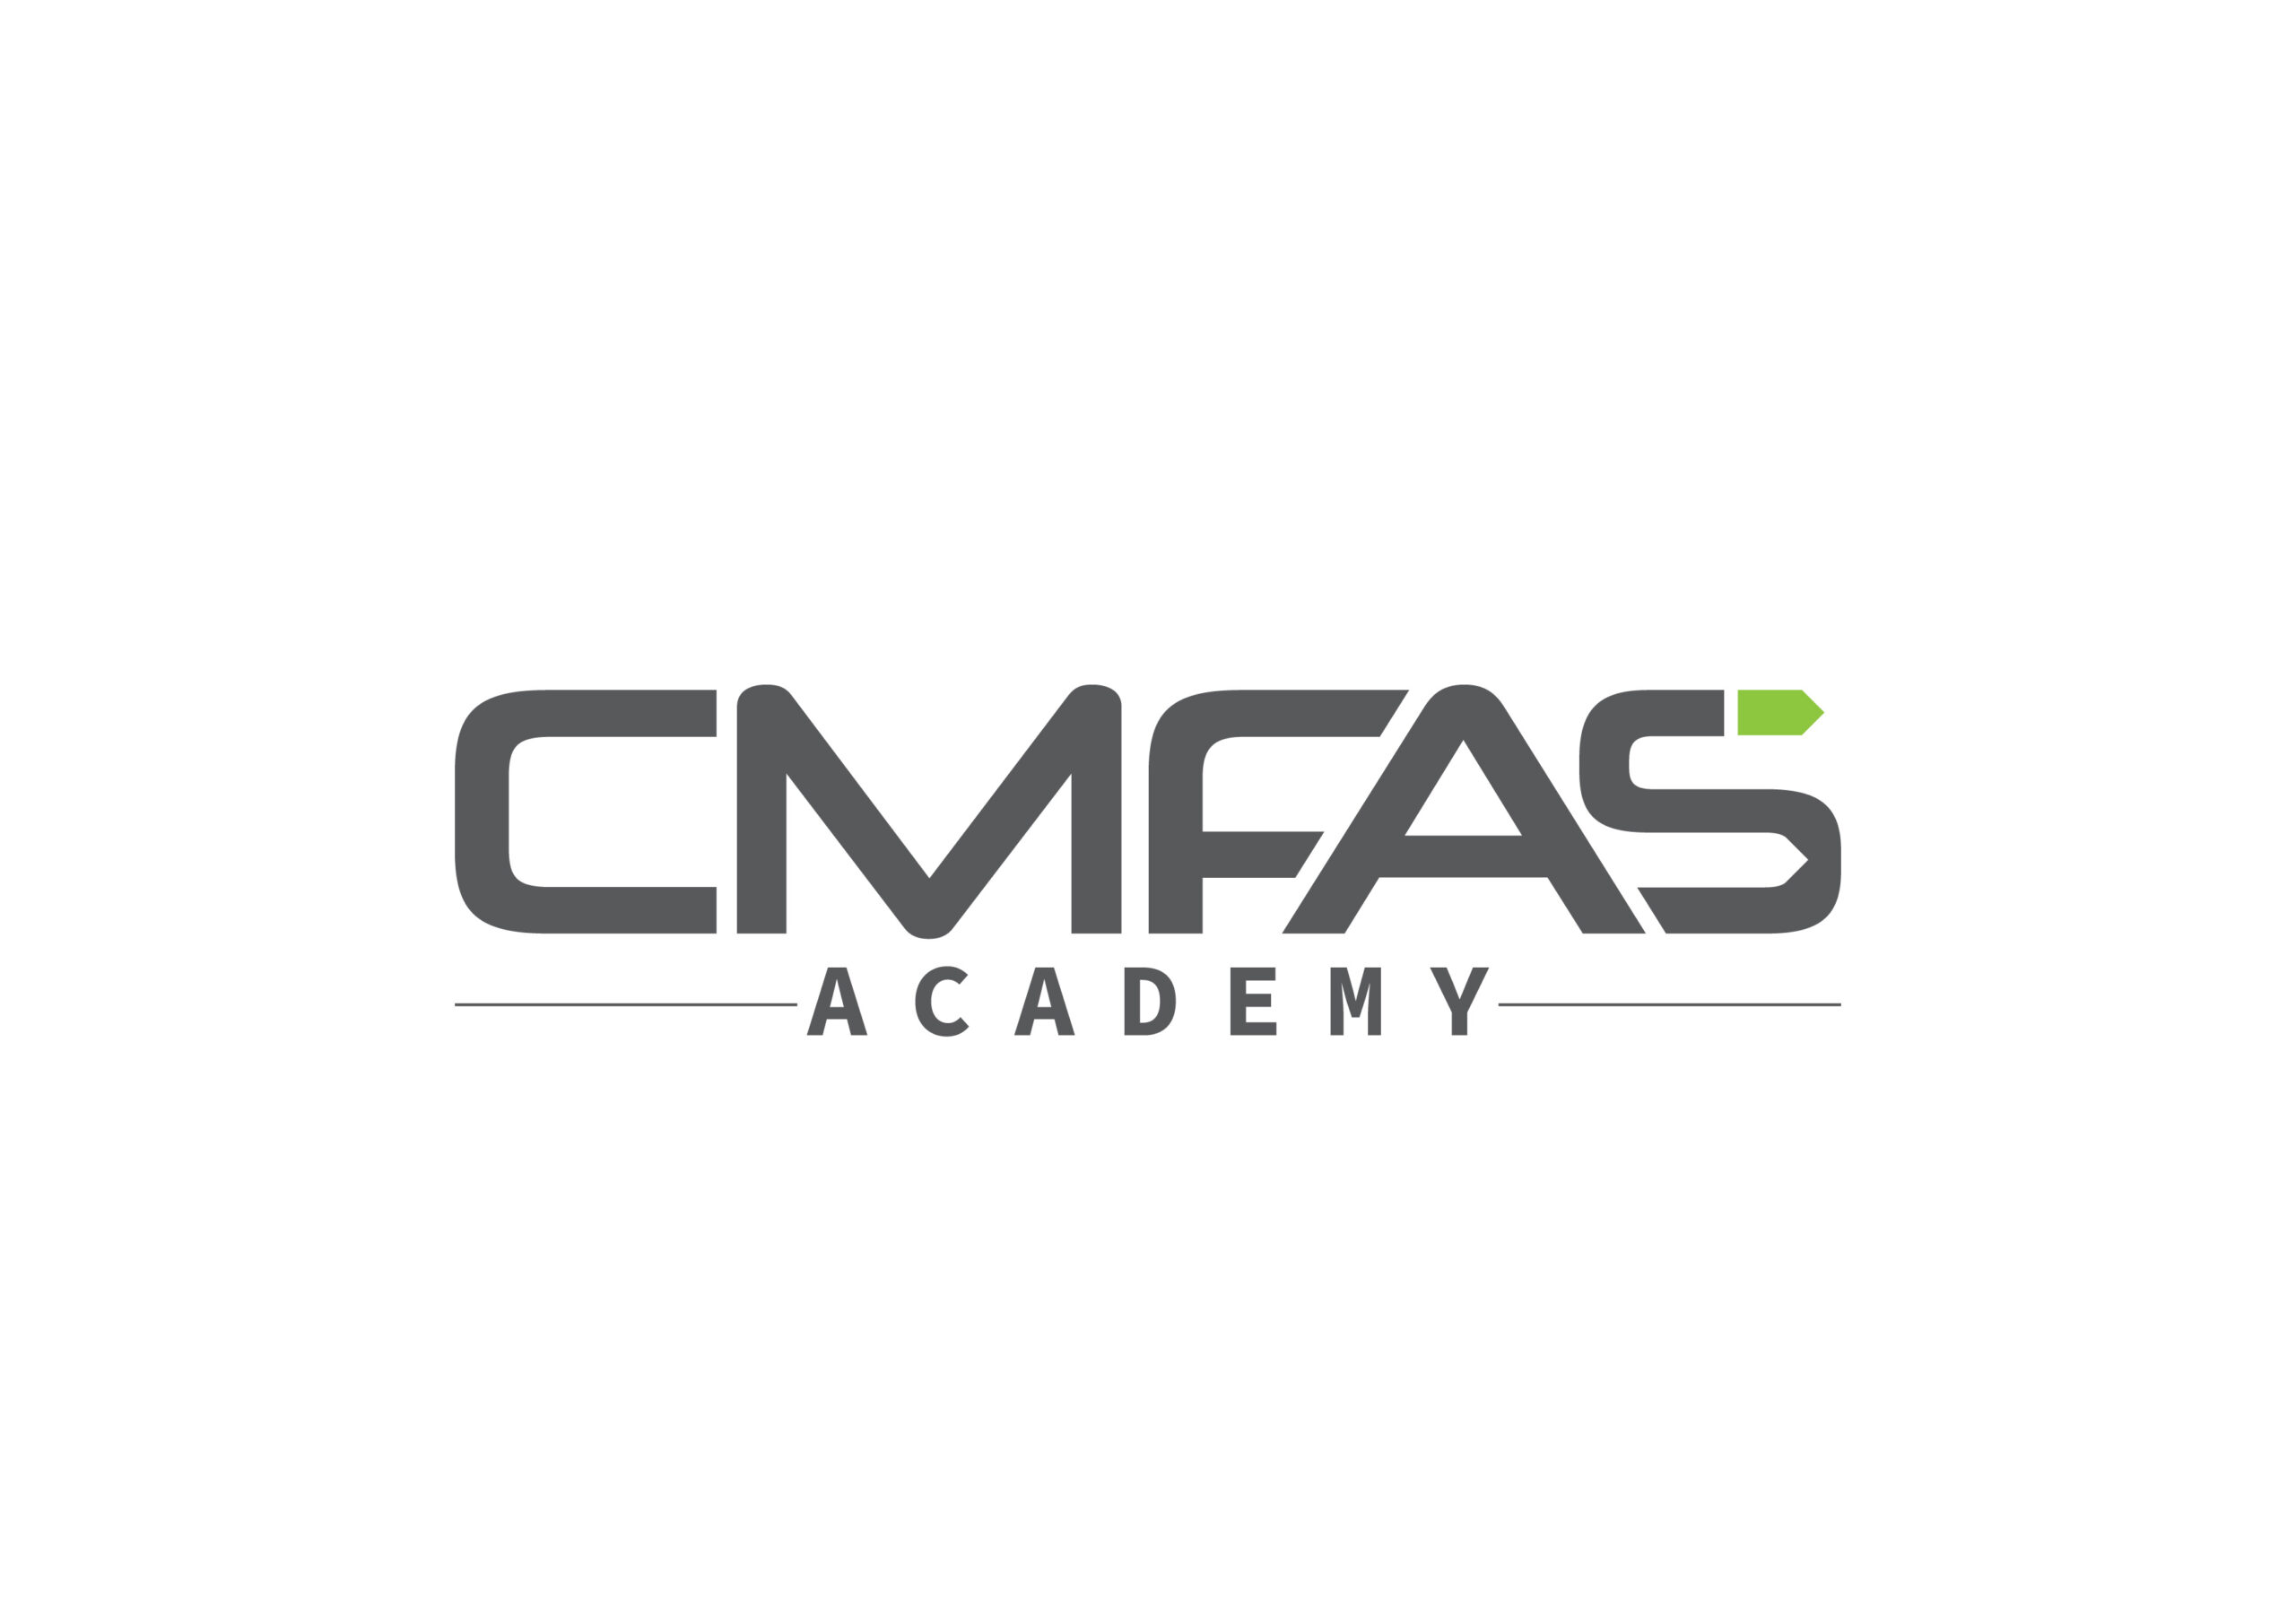 CMFAS Academy